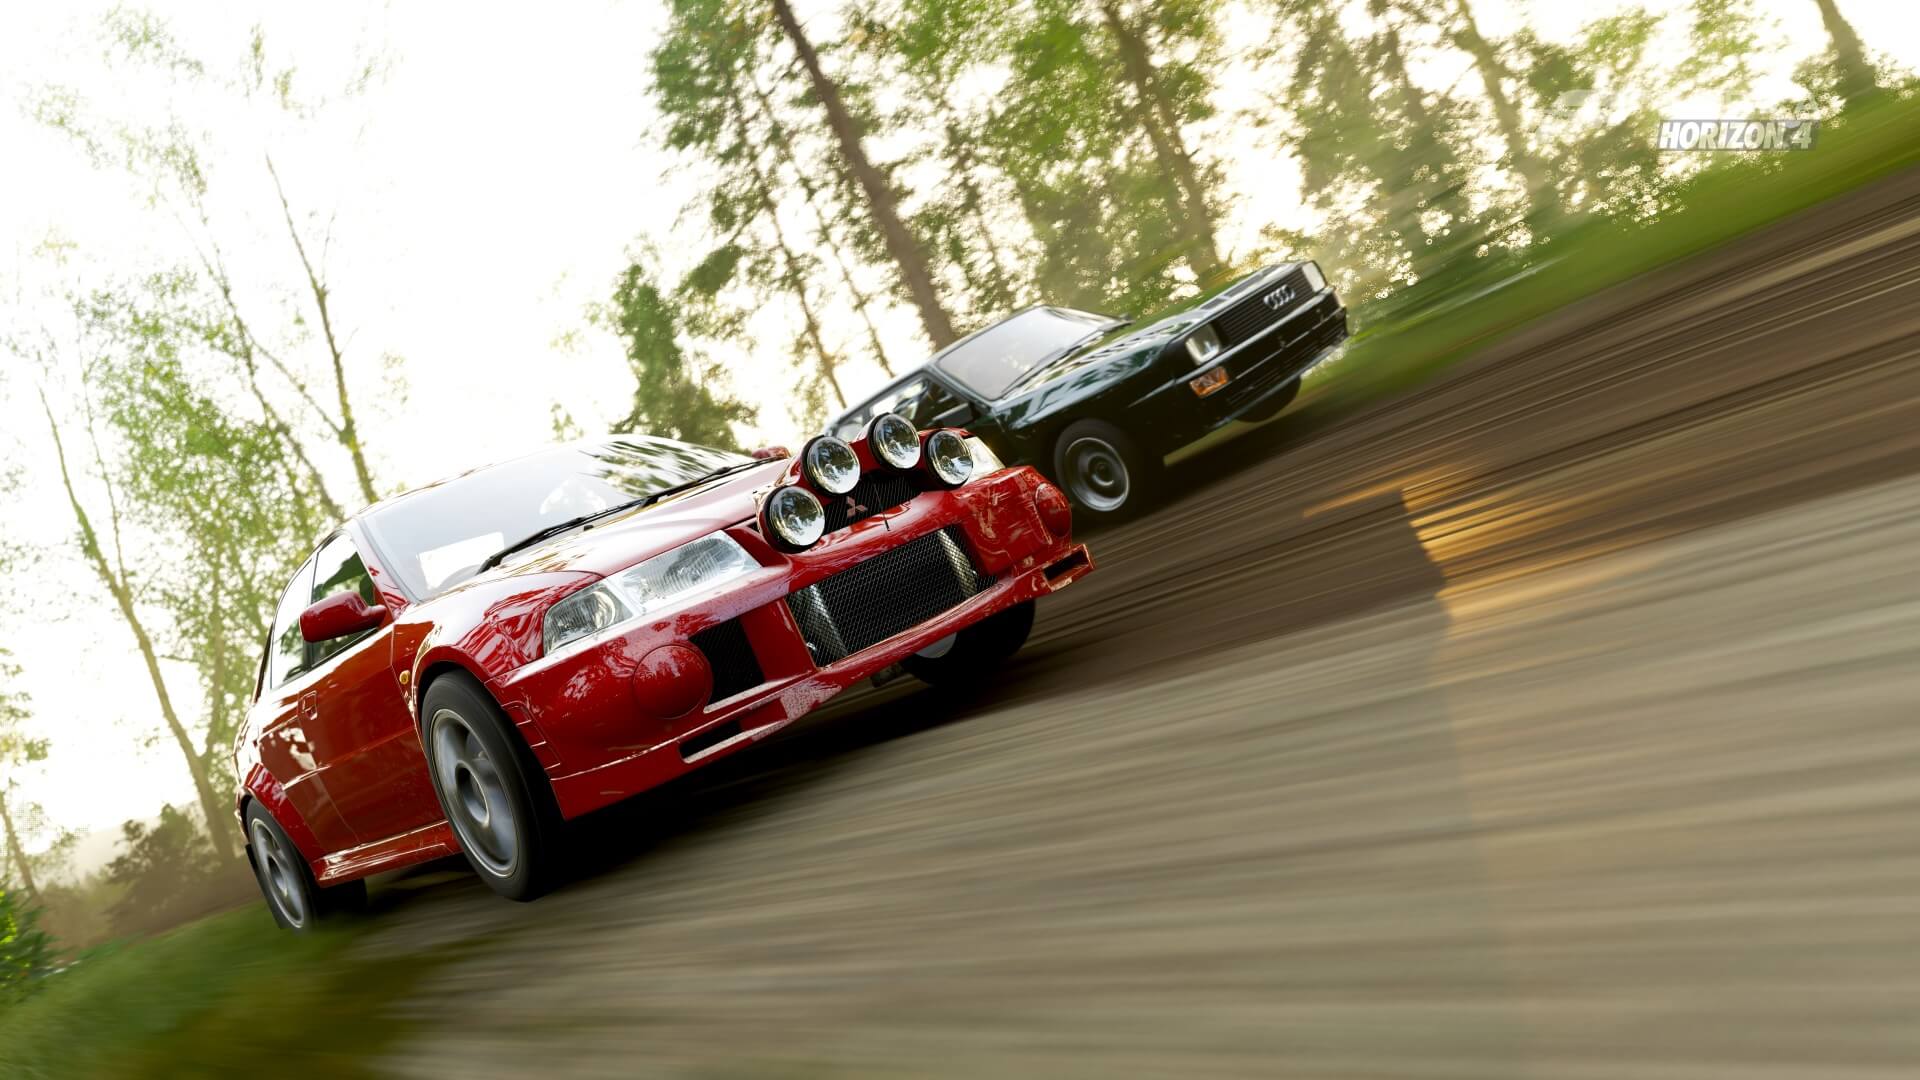 Forza Horizon 4 – GTPlanet